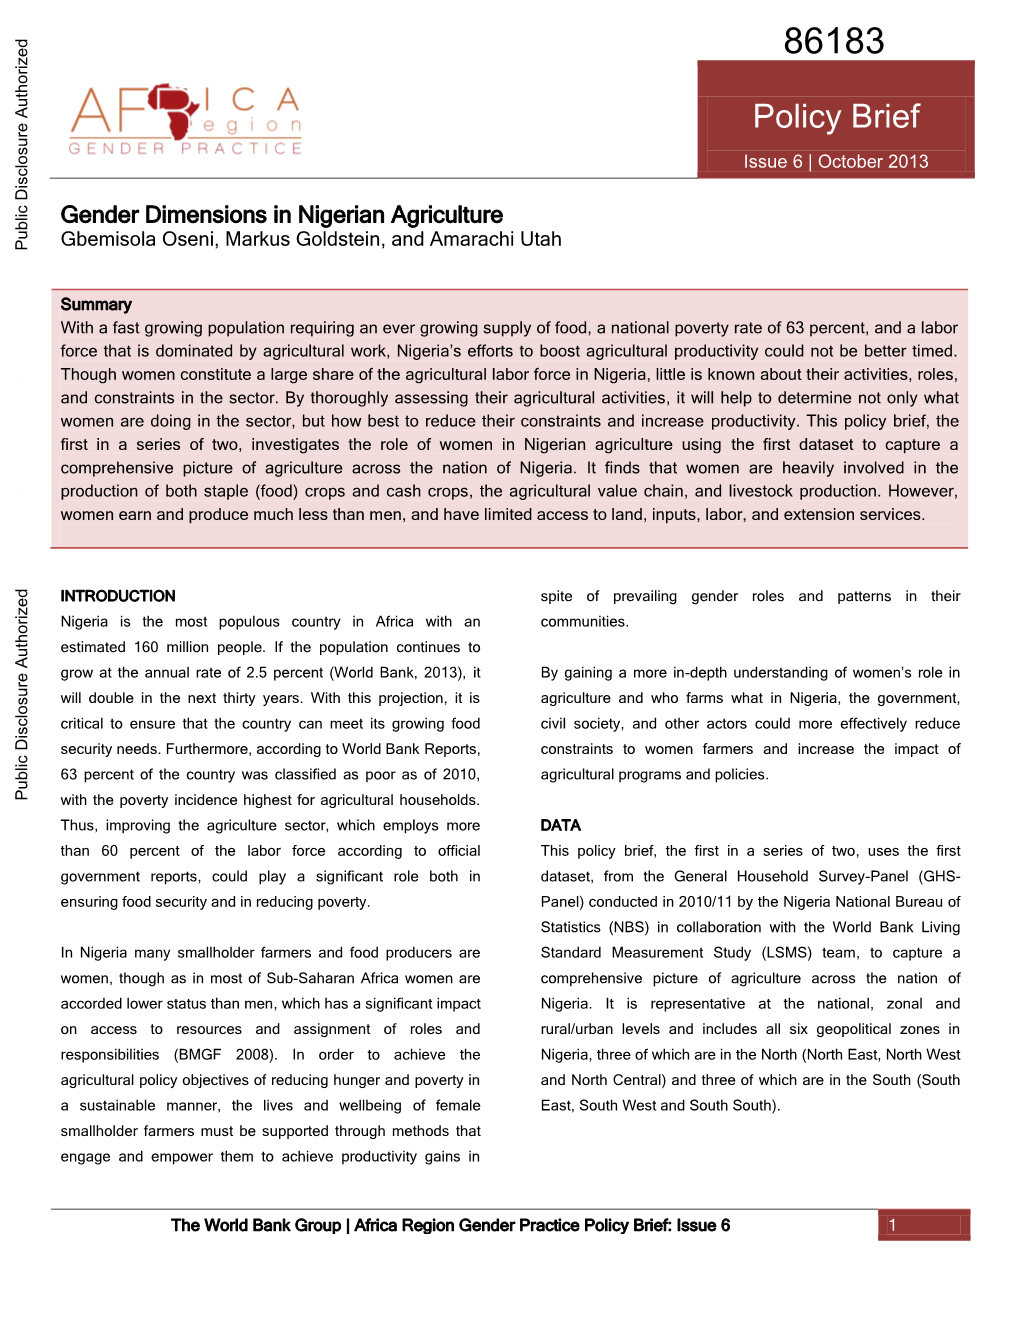 Gender Dimensions in Nigerian Agriculture Gbemisola Oseni, Markus Goldstein, and Amarachi Utah Public Disclosure Authorized